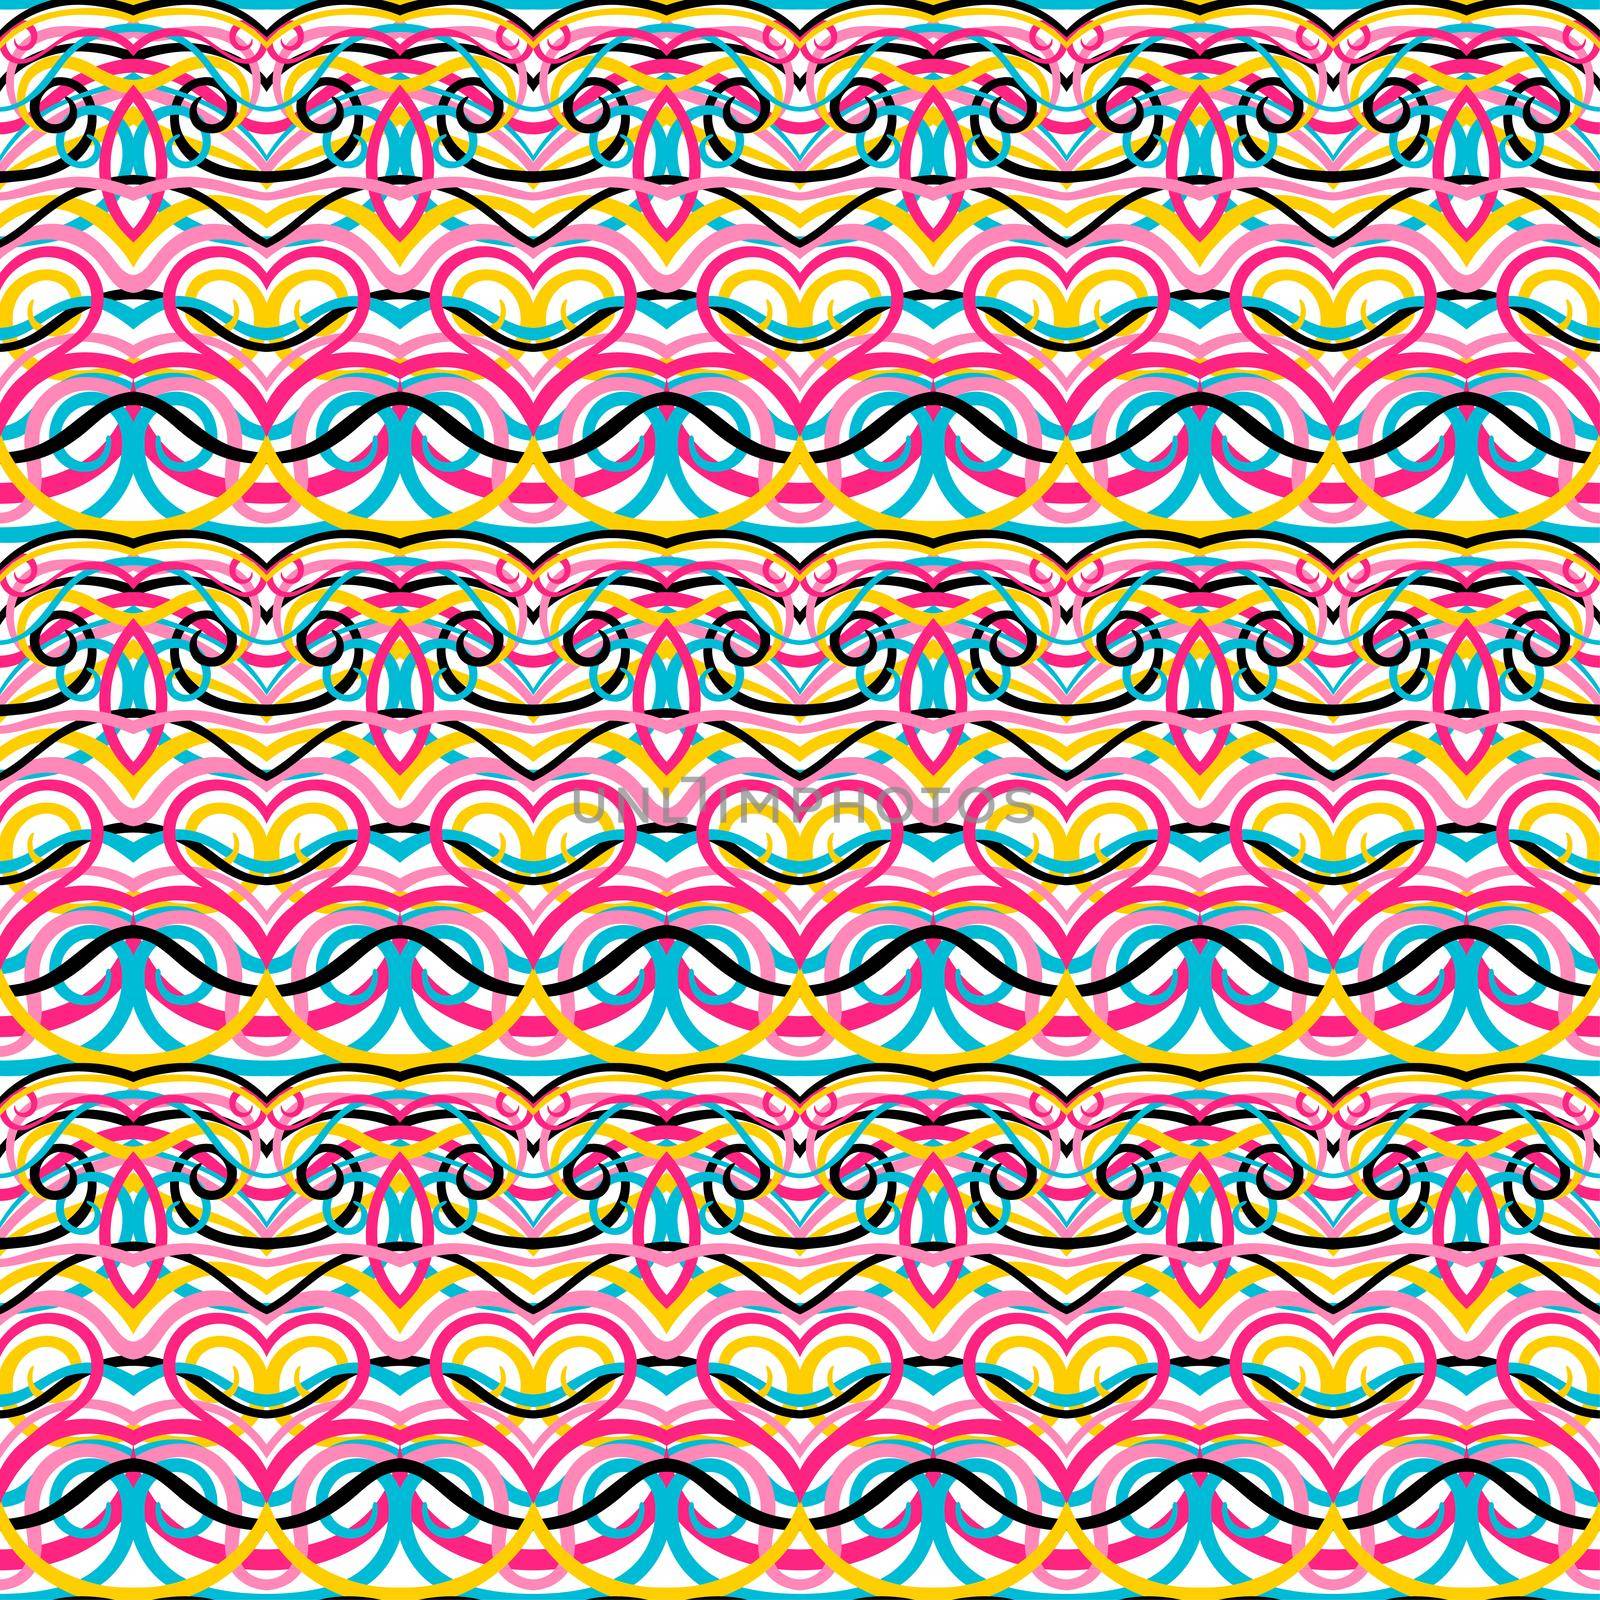 abstract pattern with swirls by melazerg